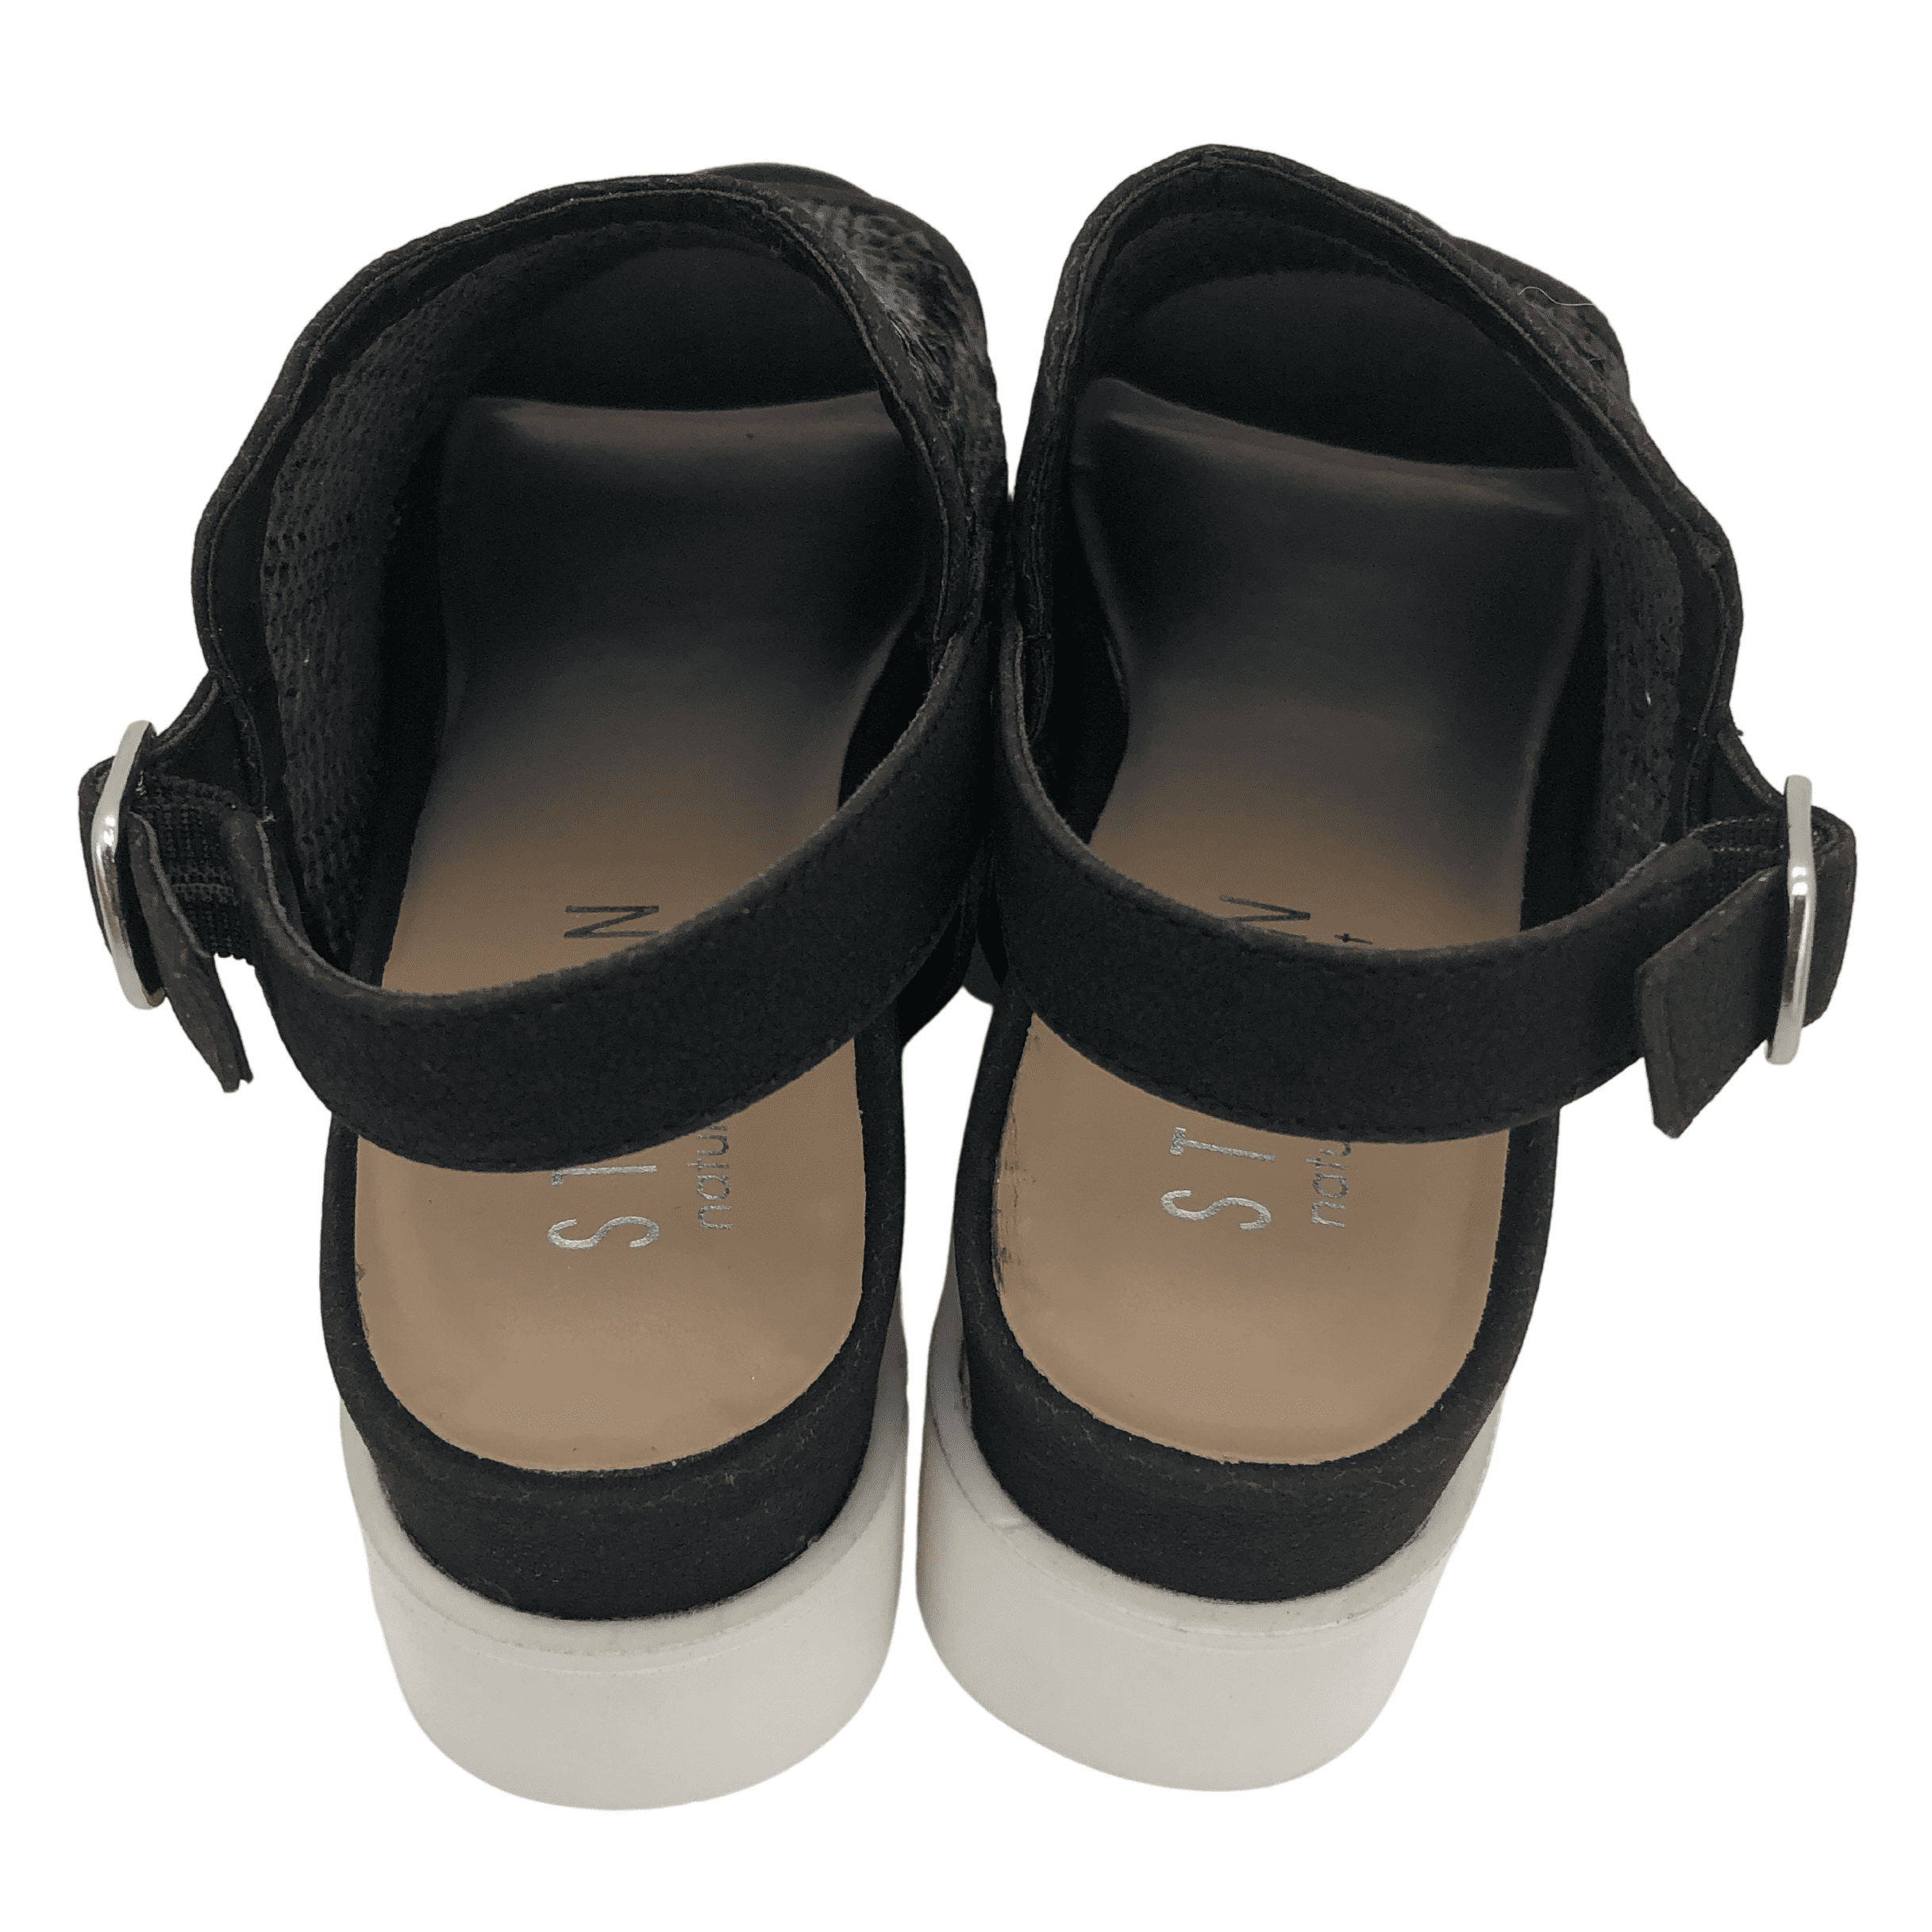 Steven by Steve Madden Ladies NC-Kart Wedge sling back sandals in size 7.5 colour black